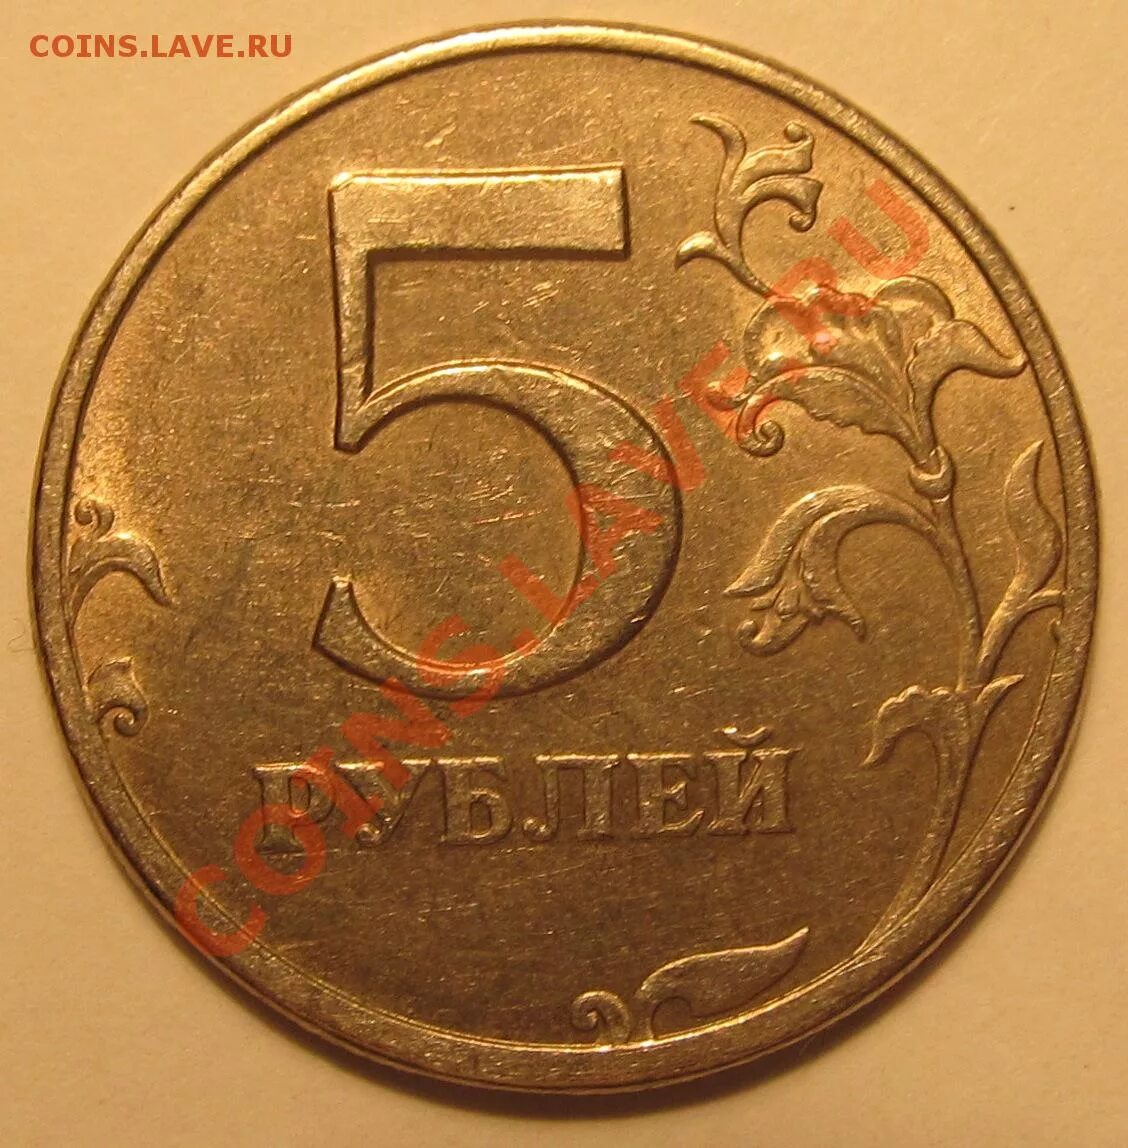 Монета 5 рублей спмд. 5 Рублей 1998 СПМД -шт. 2.21-2.22. Бракованная 5 рублей 1997 года. Монеты 2005 5$. 2 Рубля 1997 СПДМ золото.